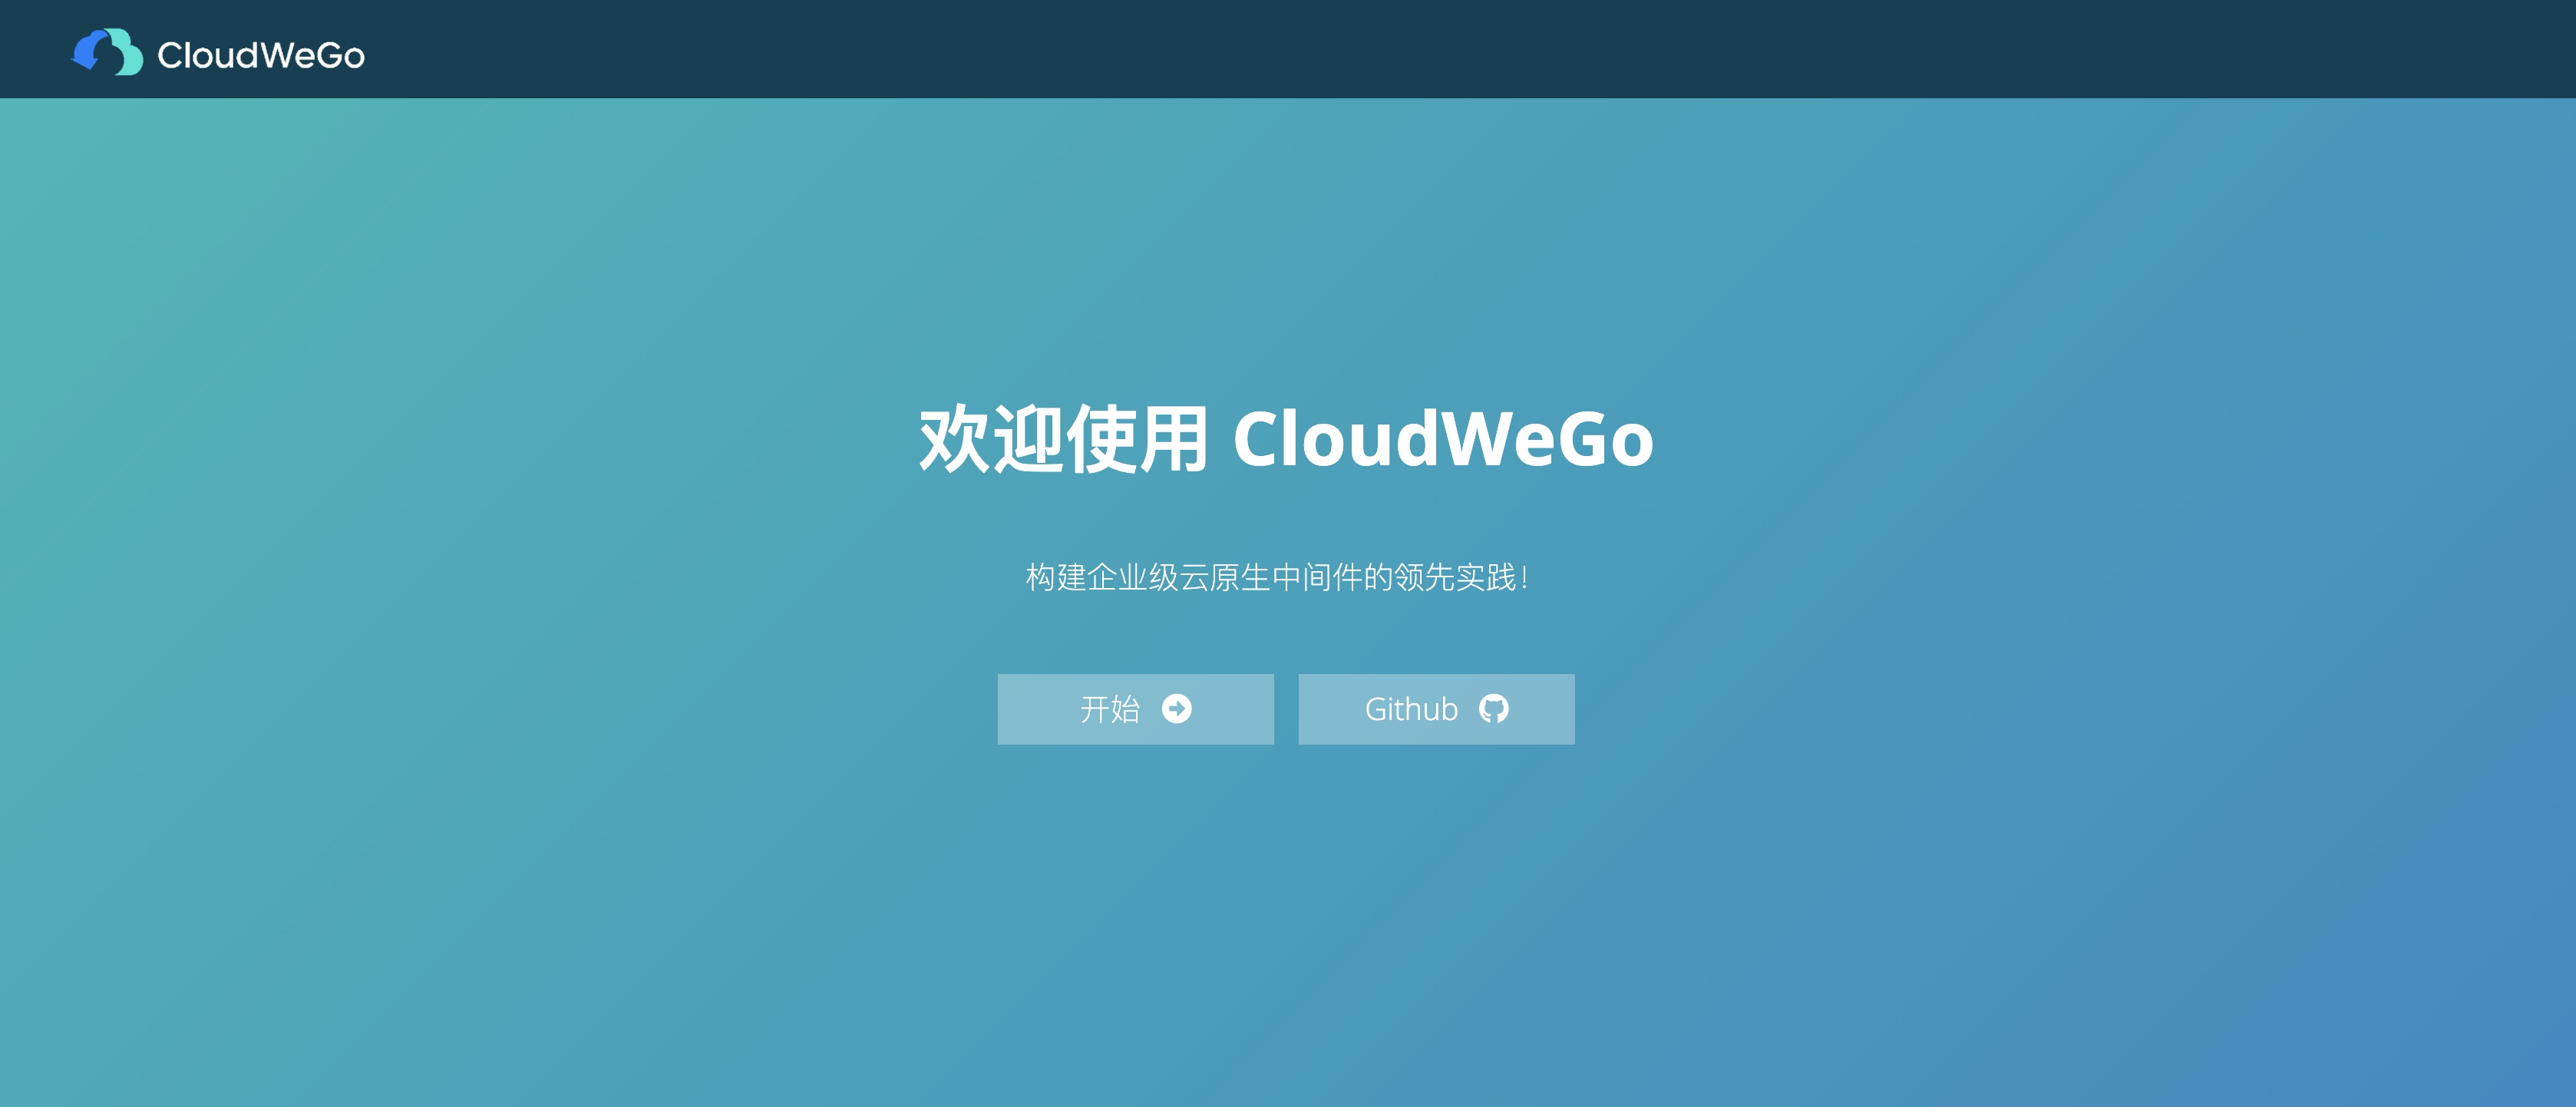 CloudWeGo 官方微信公众号官宣了！